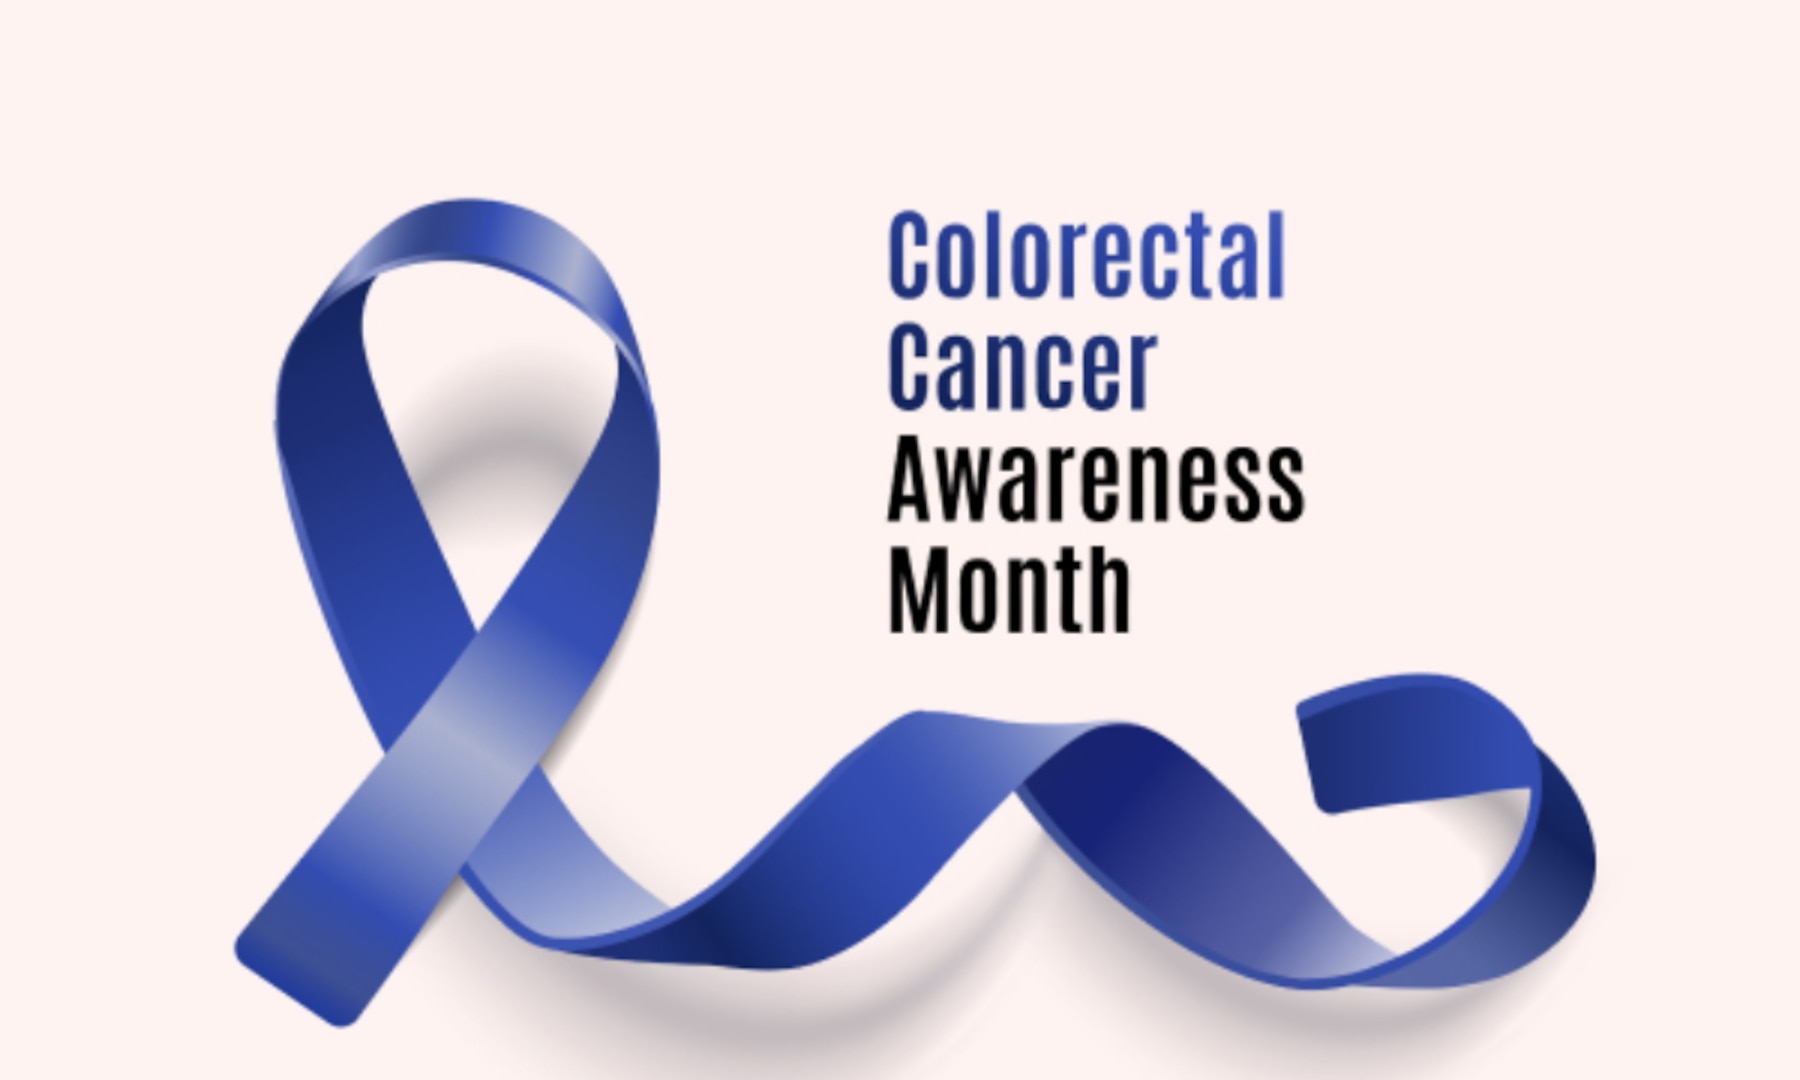 Colorectal Cancer Awareness Month: Focus on screening, increasing